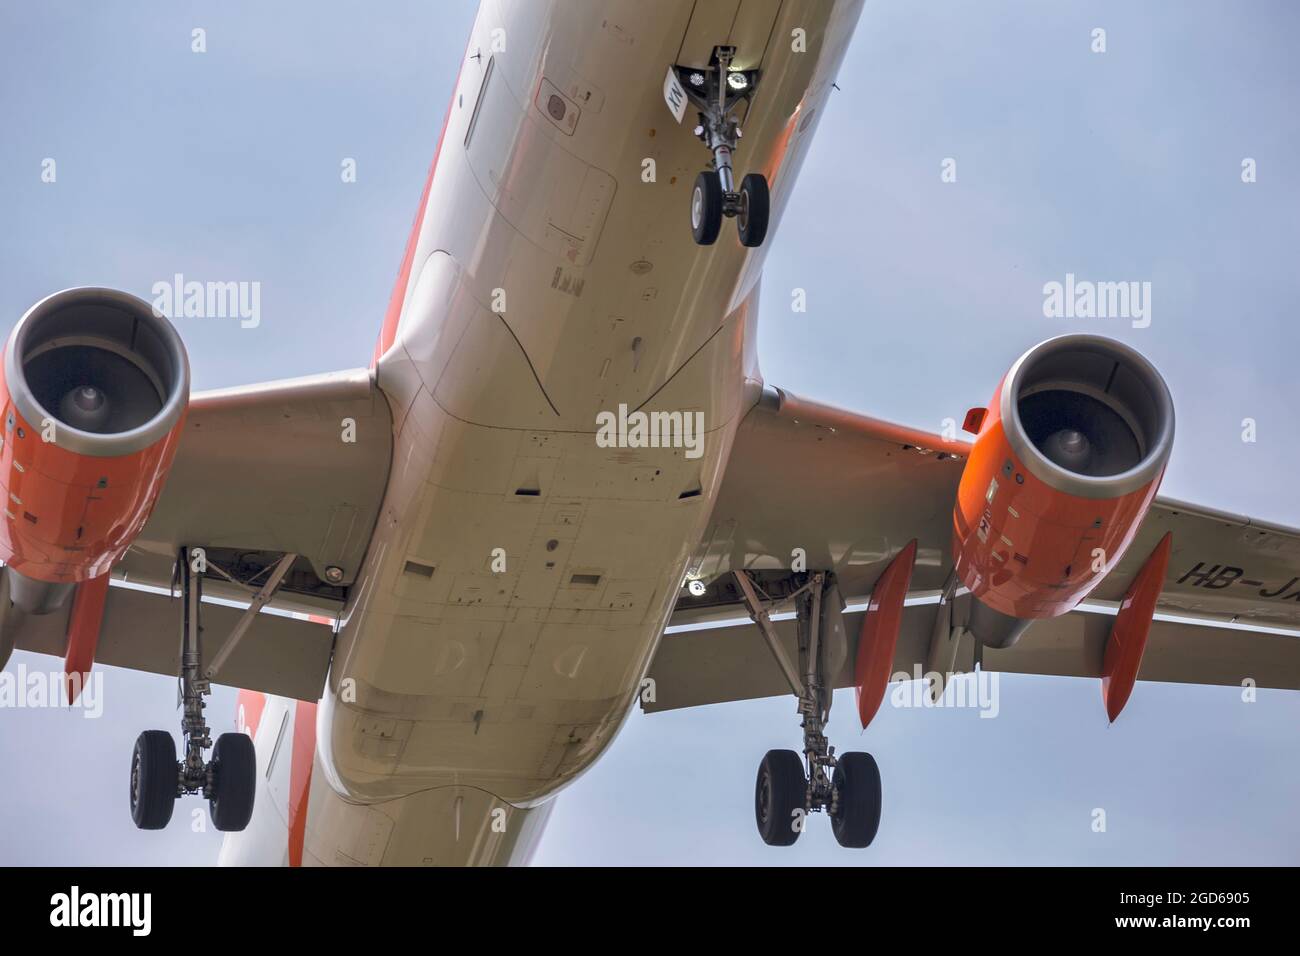 PULA, CROATIA - JULY 24, 2021: Easy Jet Airbus A320 HB-JXN passenger airplane landing at Pula Airport, Croatia Stock Photo